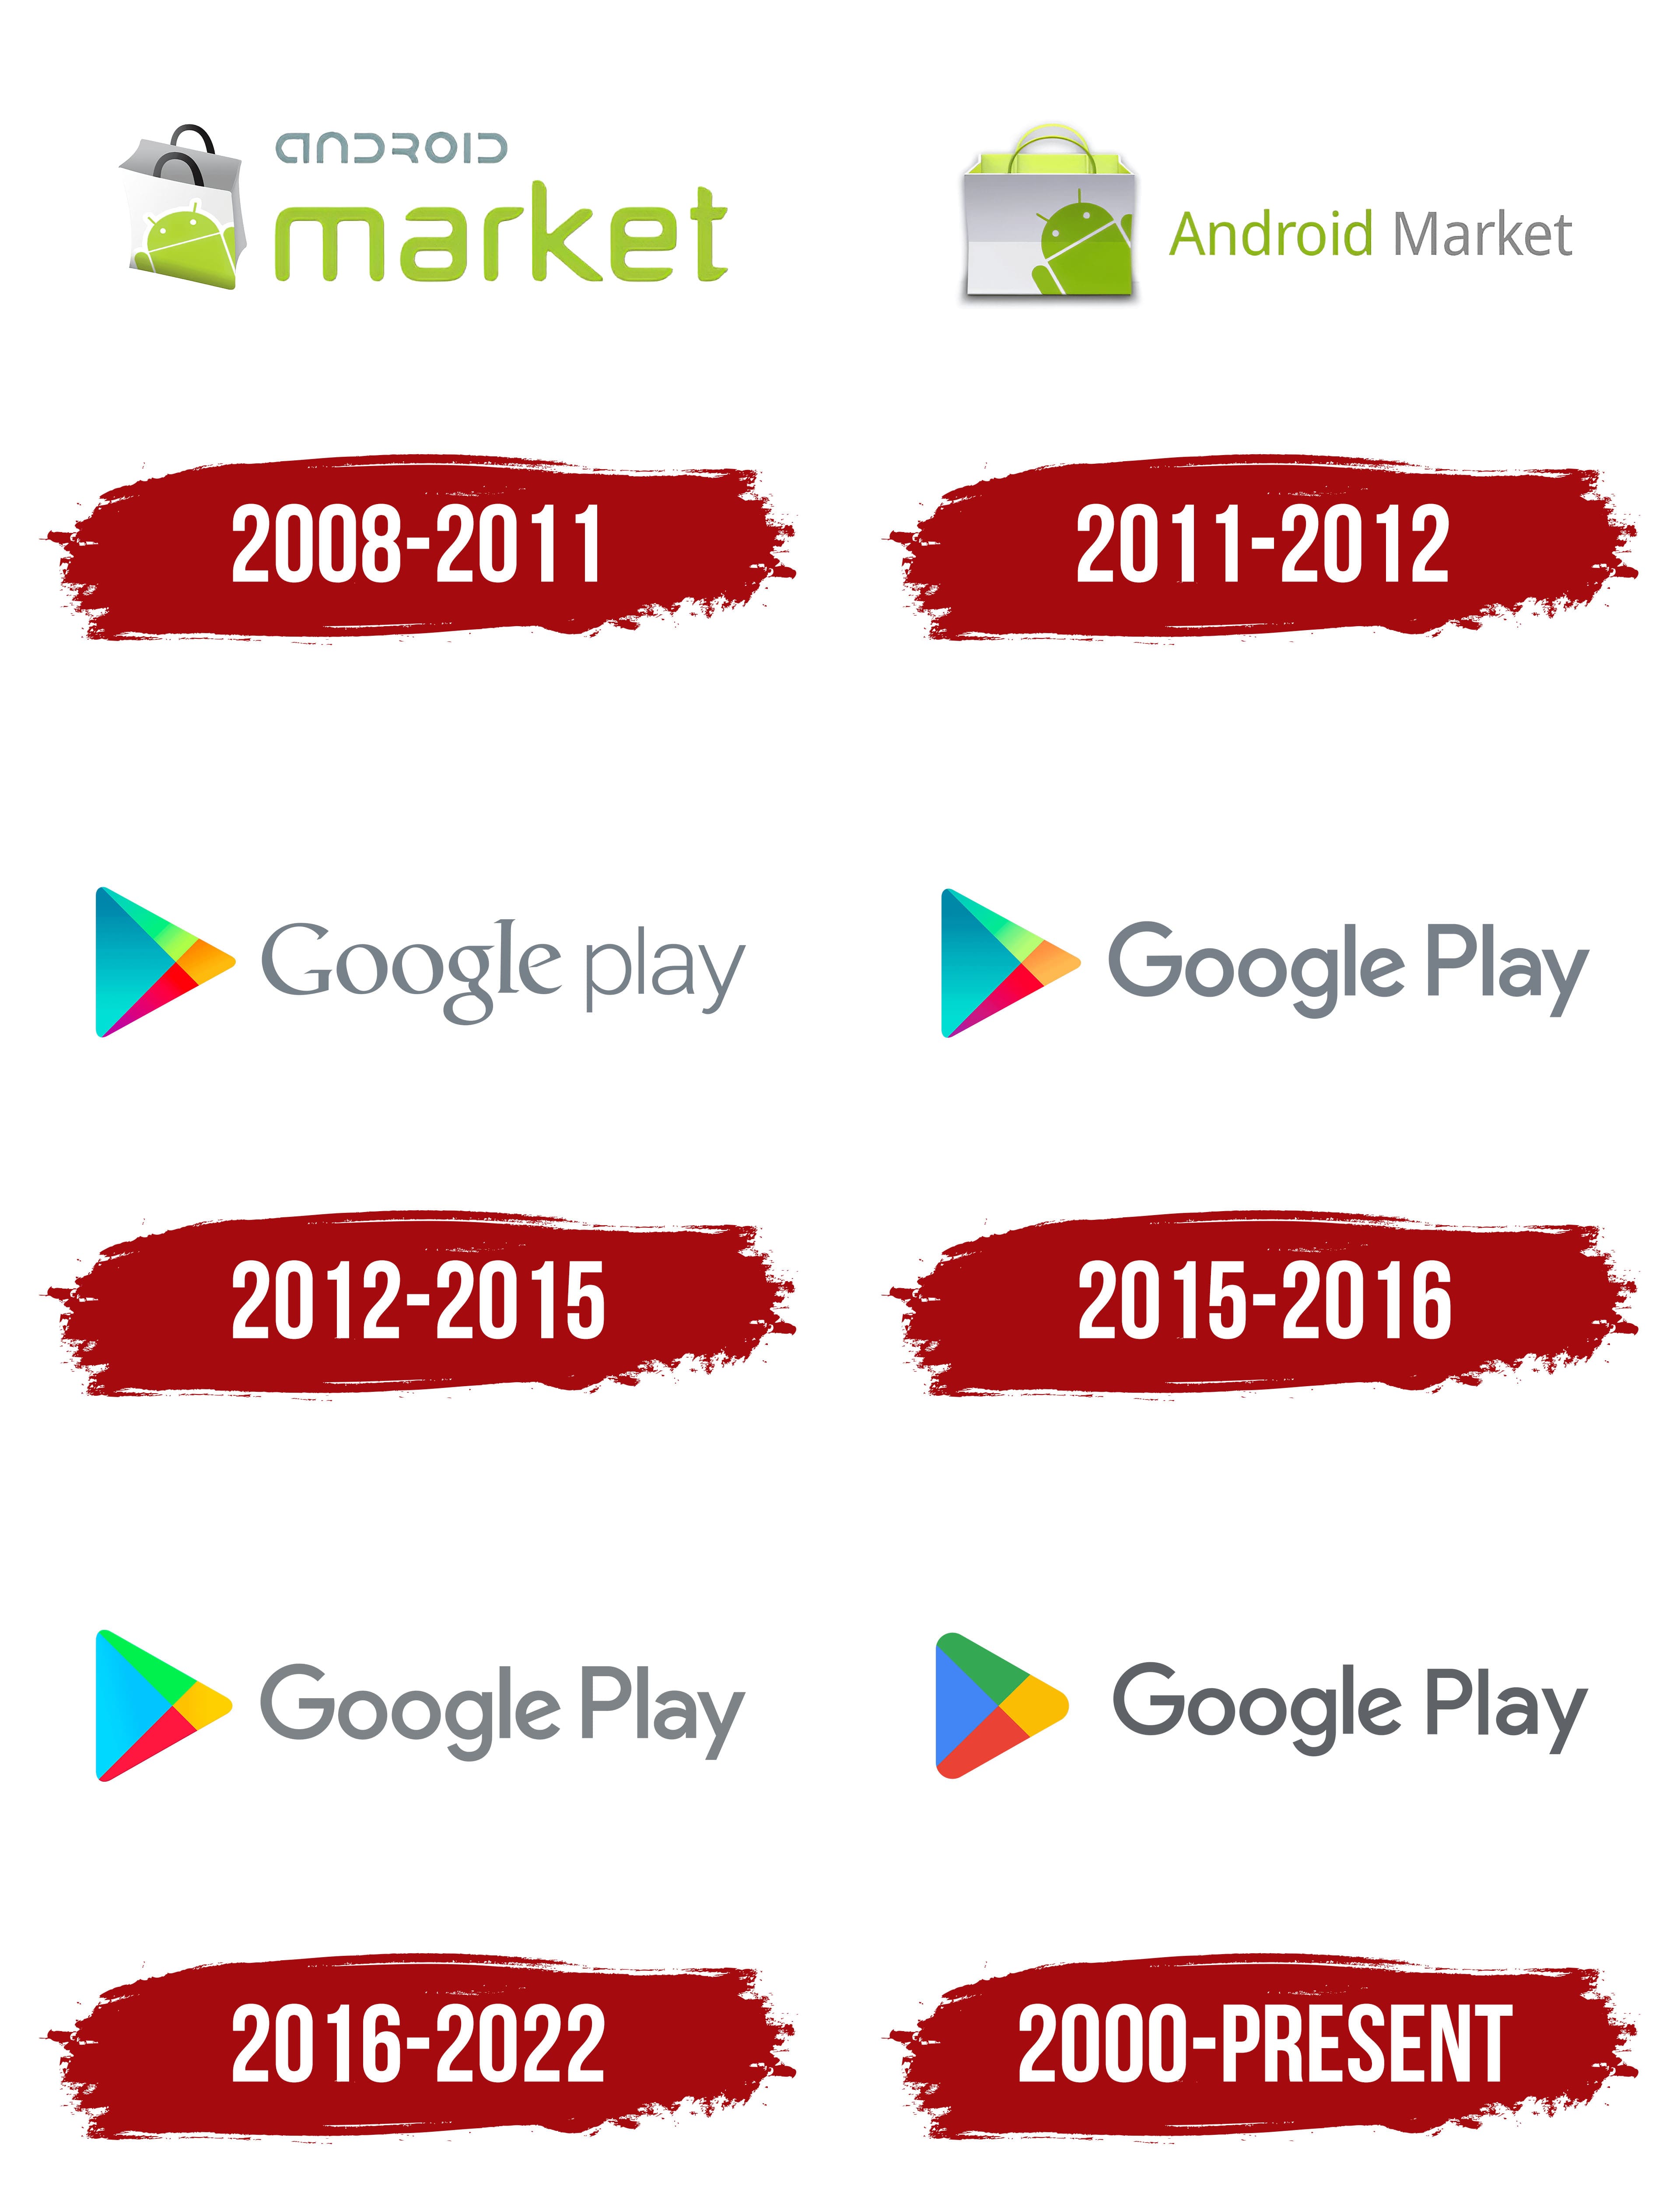 https://logos-world.net/wp-content/uploads/2021/01/Google-Play-Logo-History.jpg